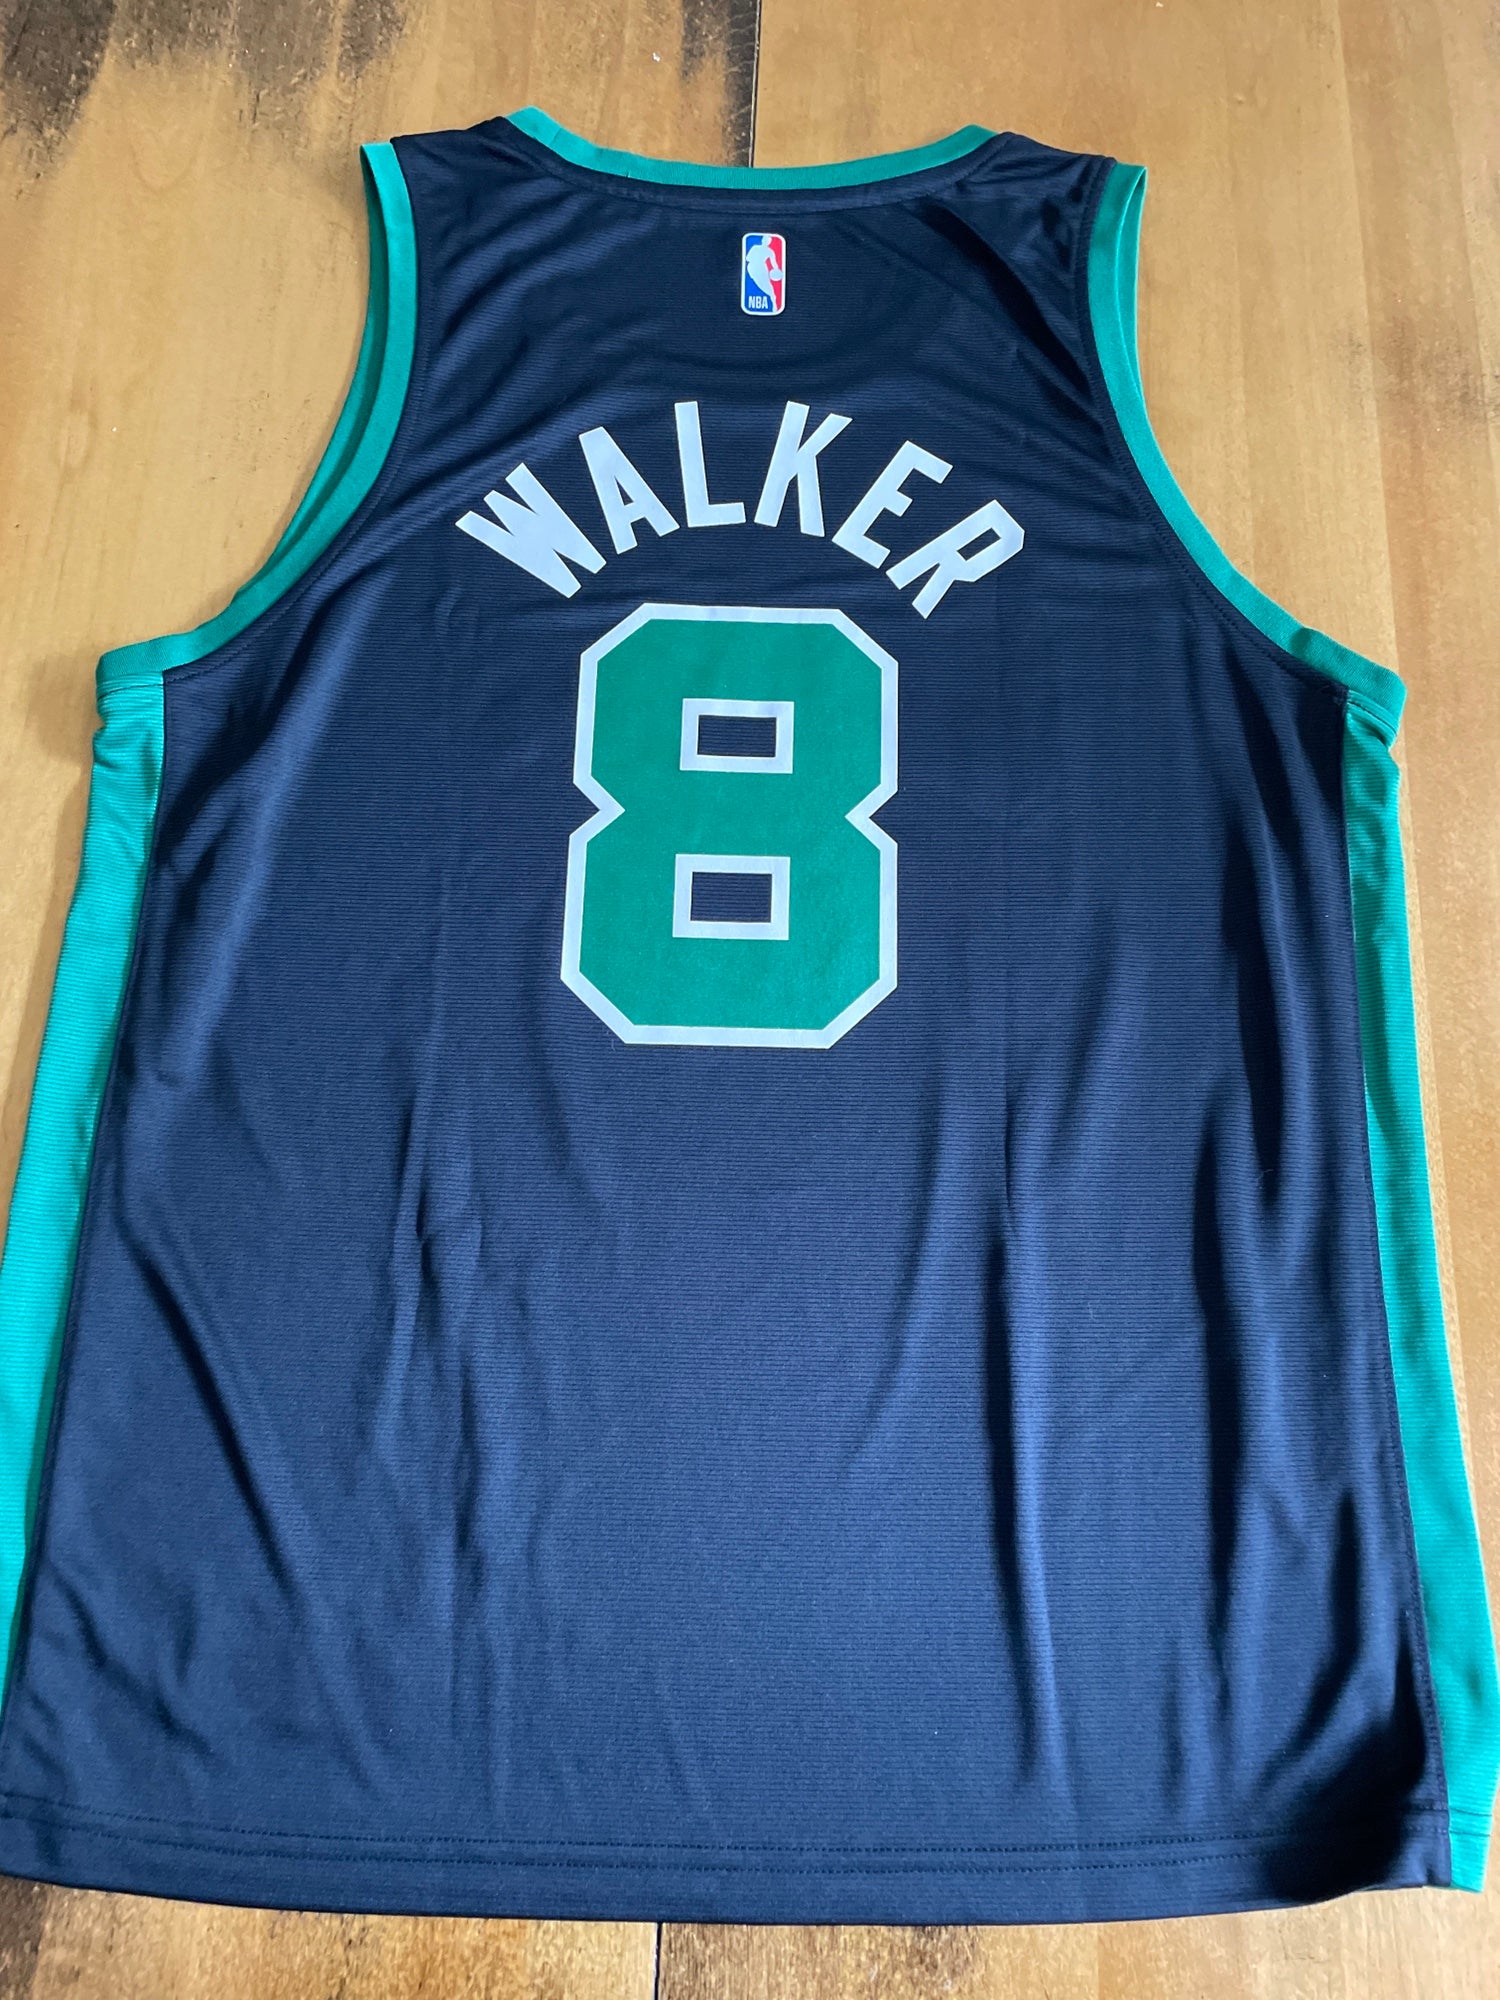 Here's Kemba Walker's Boston Celtics Jersey: Kemba #8 Celtics Jerseys